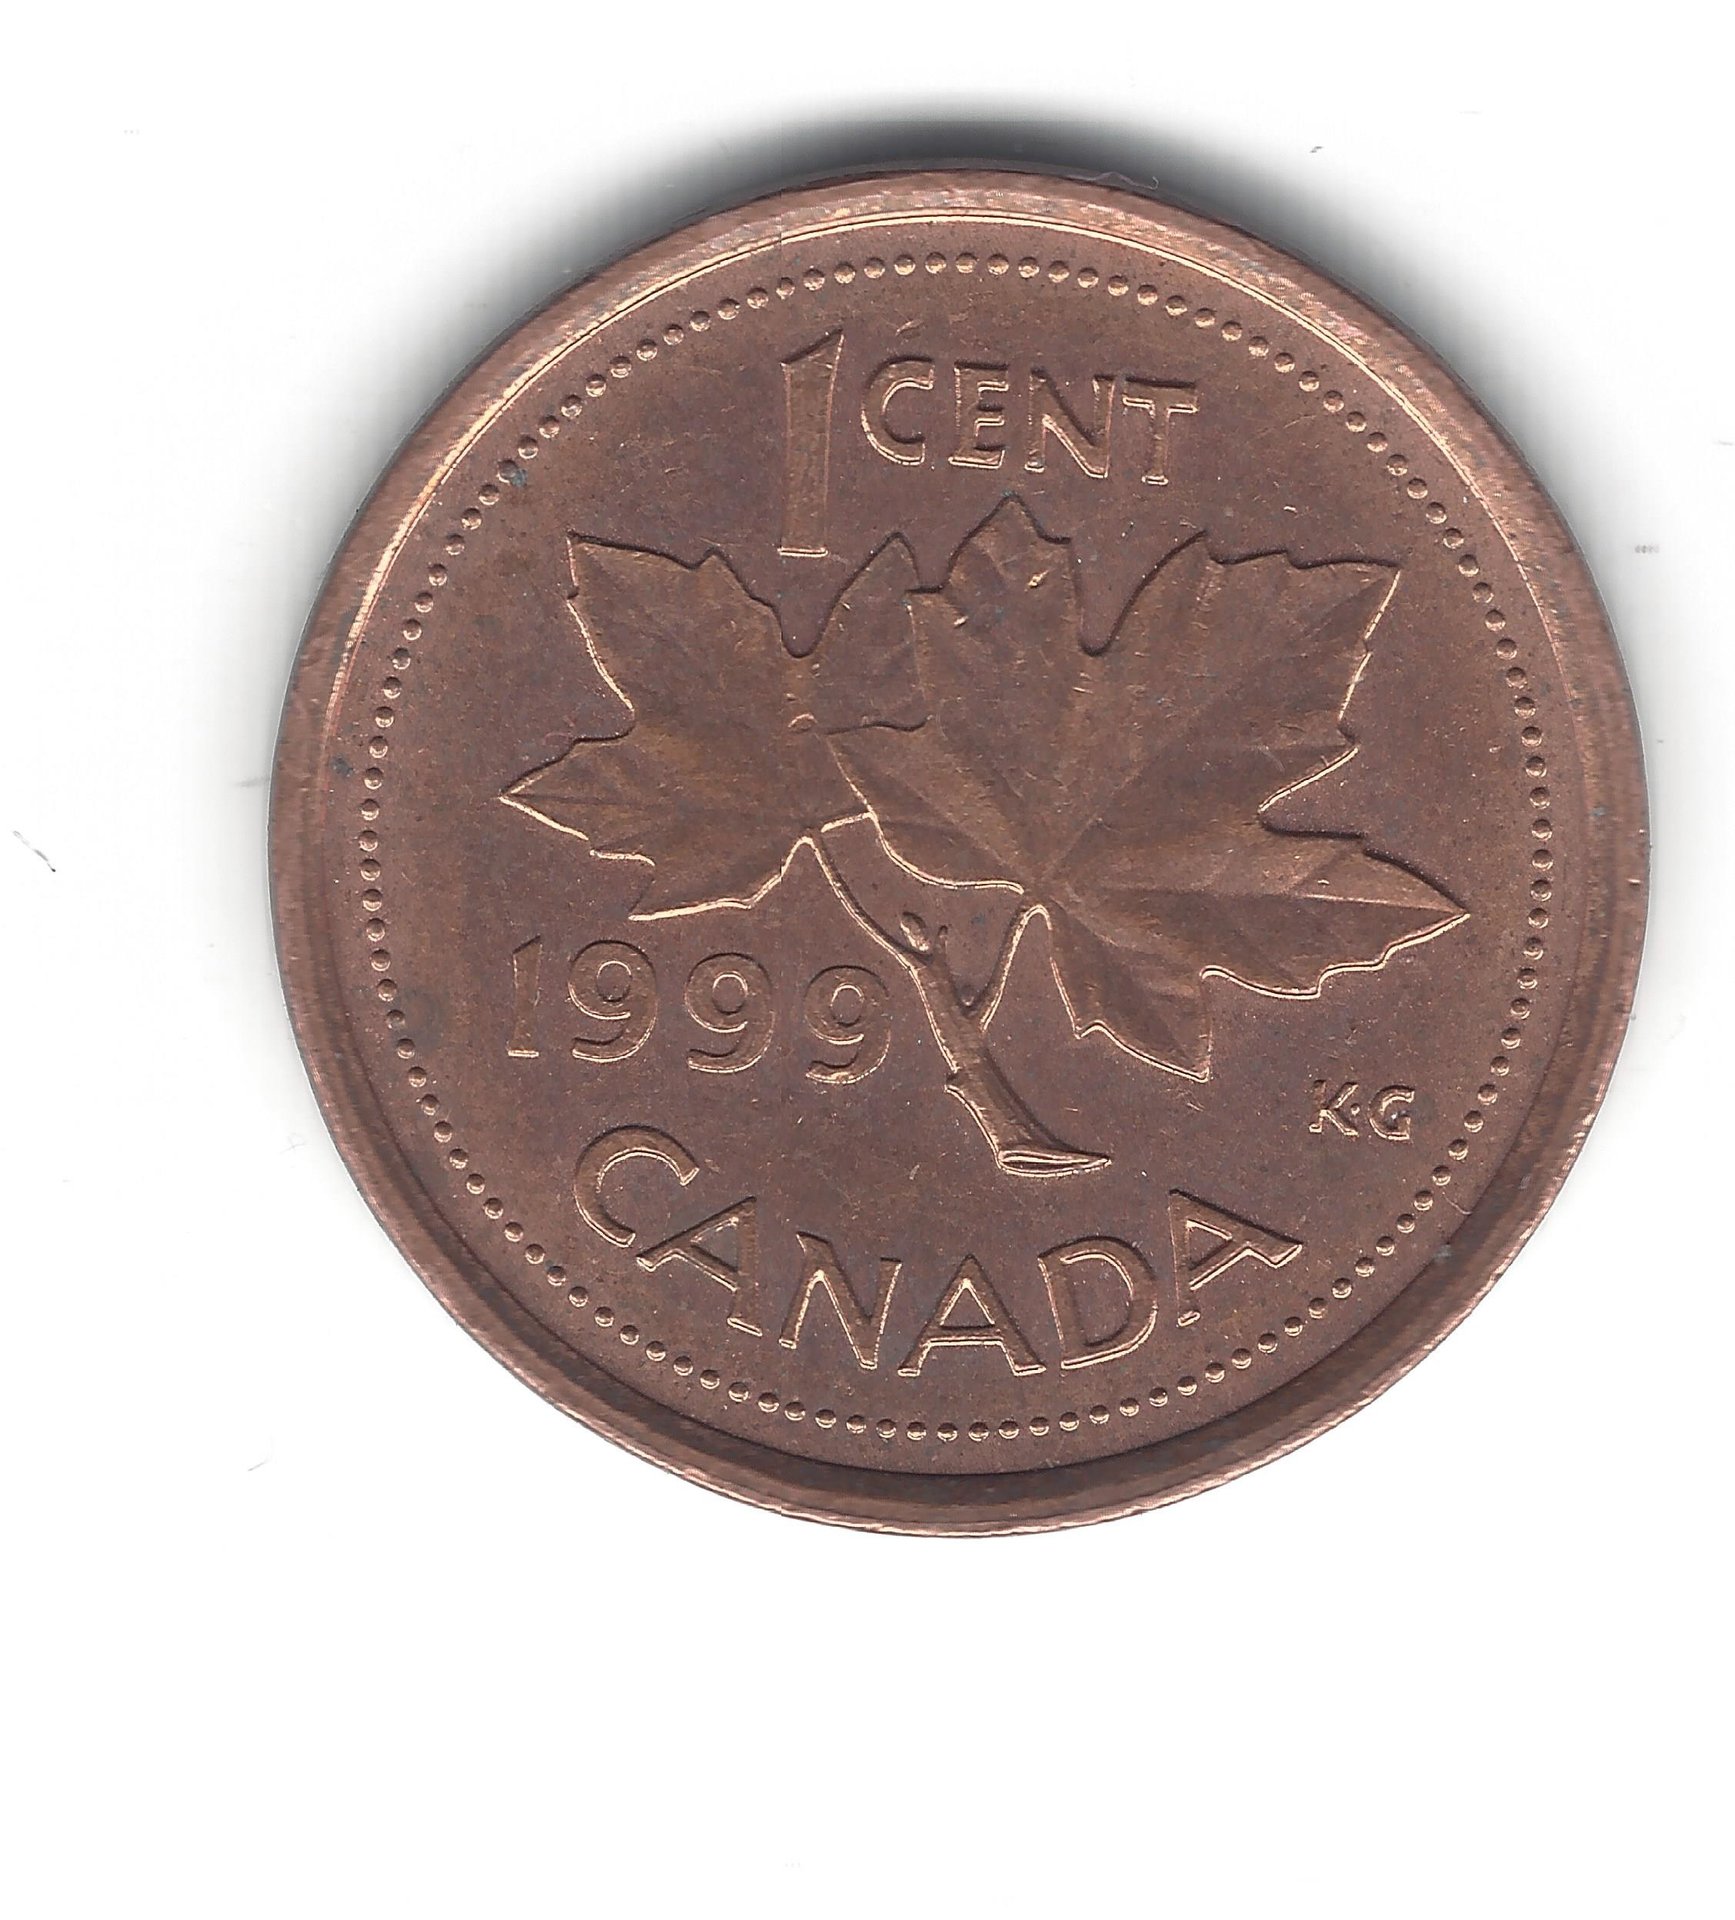 1999 canaddian penny  reverse.jpg